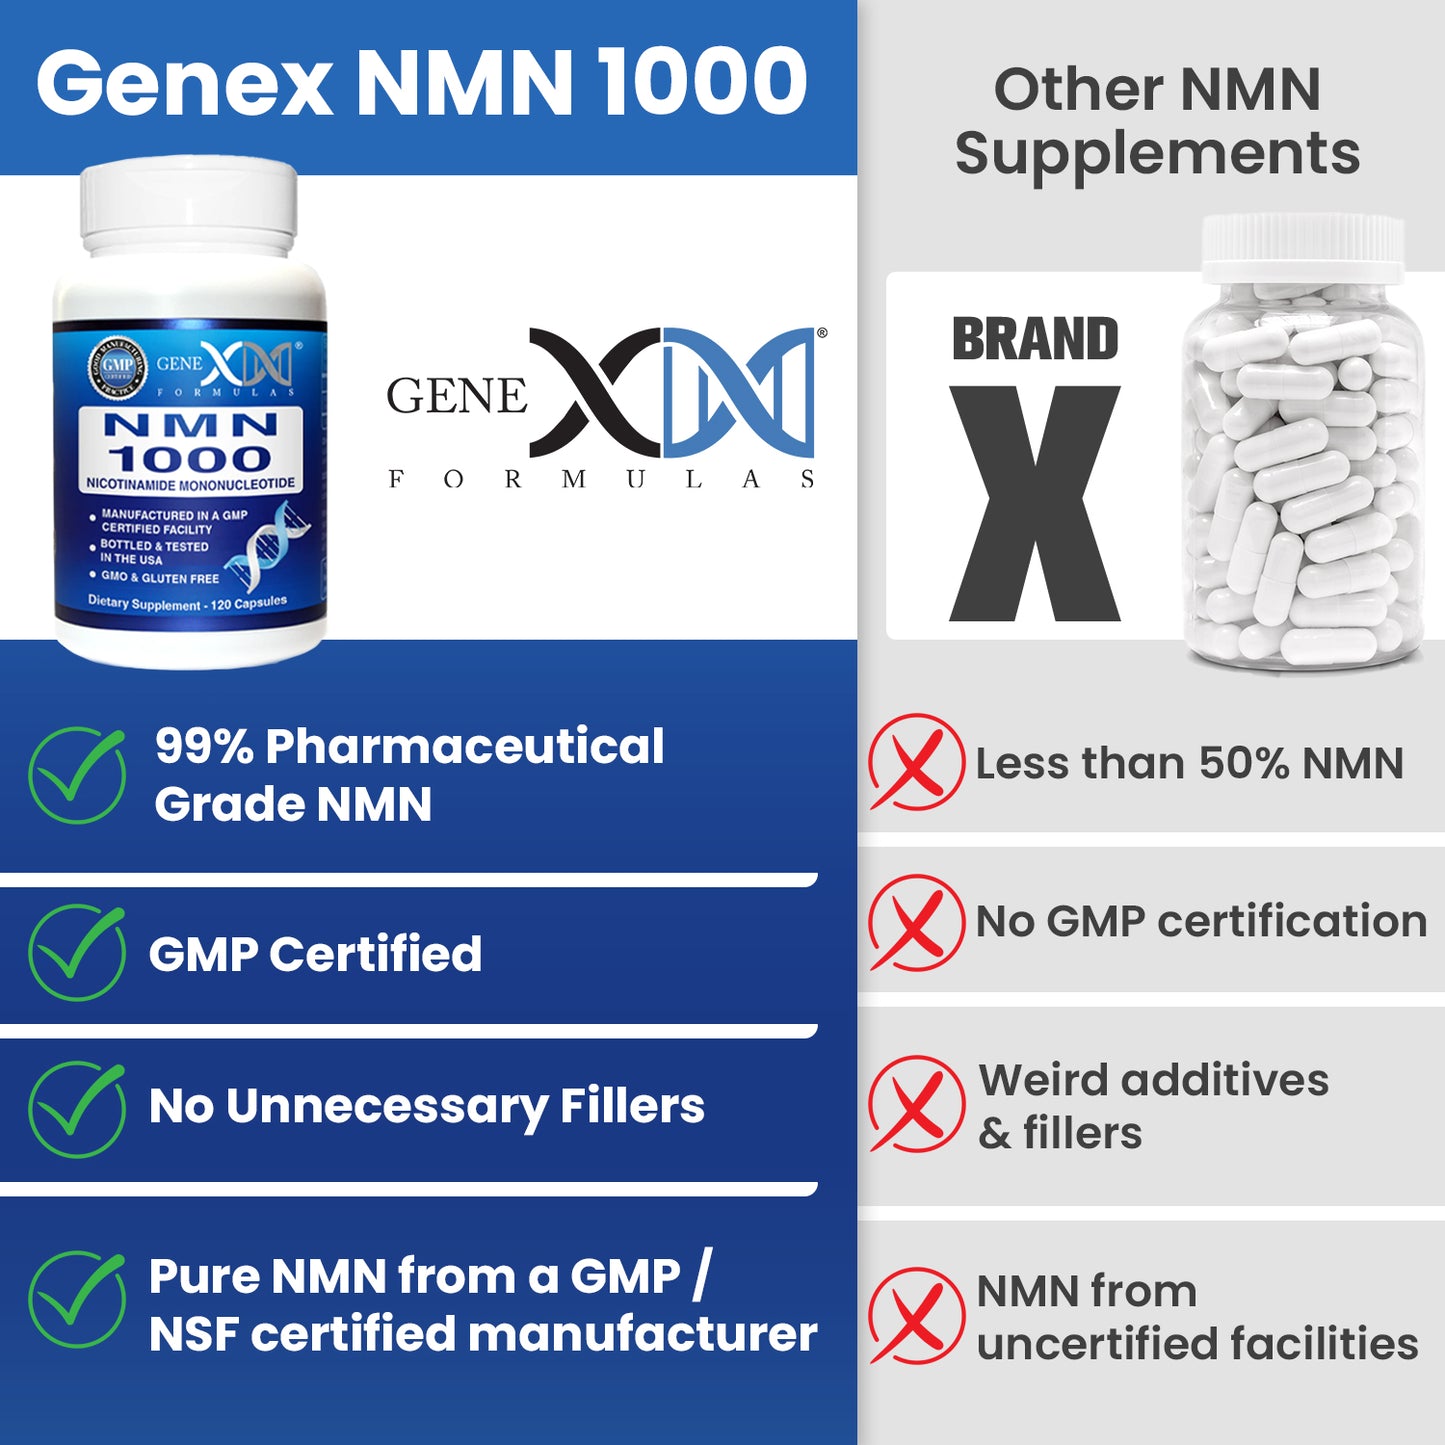 NMNs Nicotinamide Mononucleotide 1000mg per serving (120 Capsules)